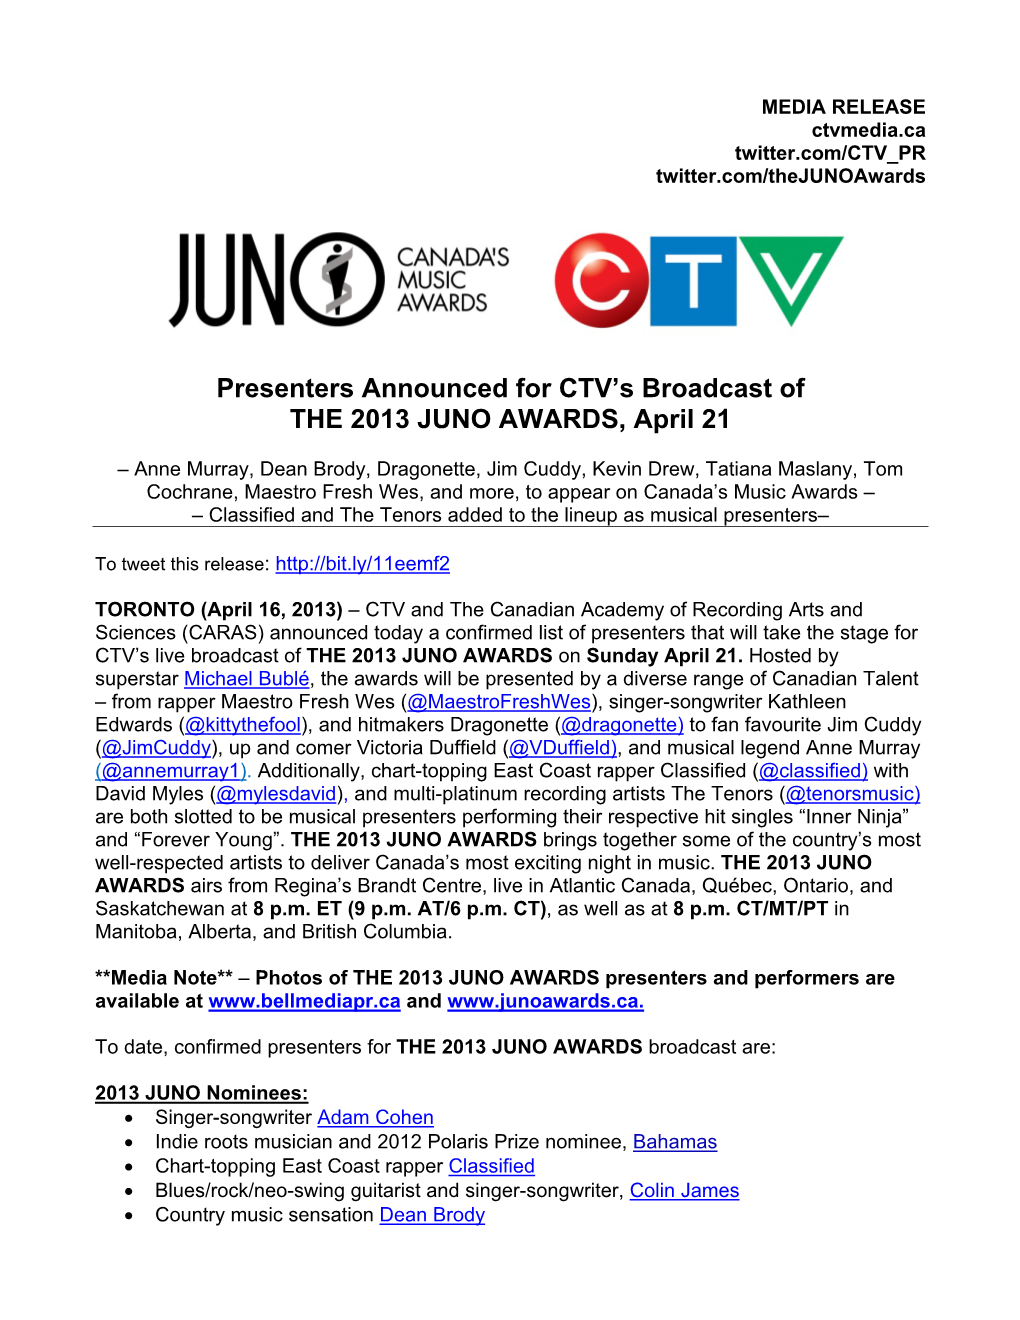 Presenters Announced for CTV's Broadcast of the 2013 JUNO